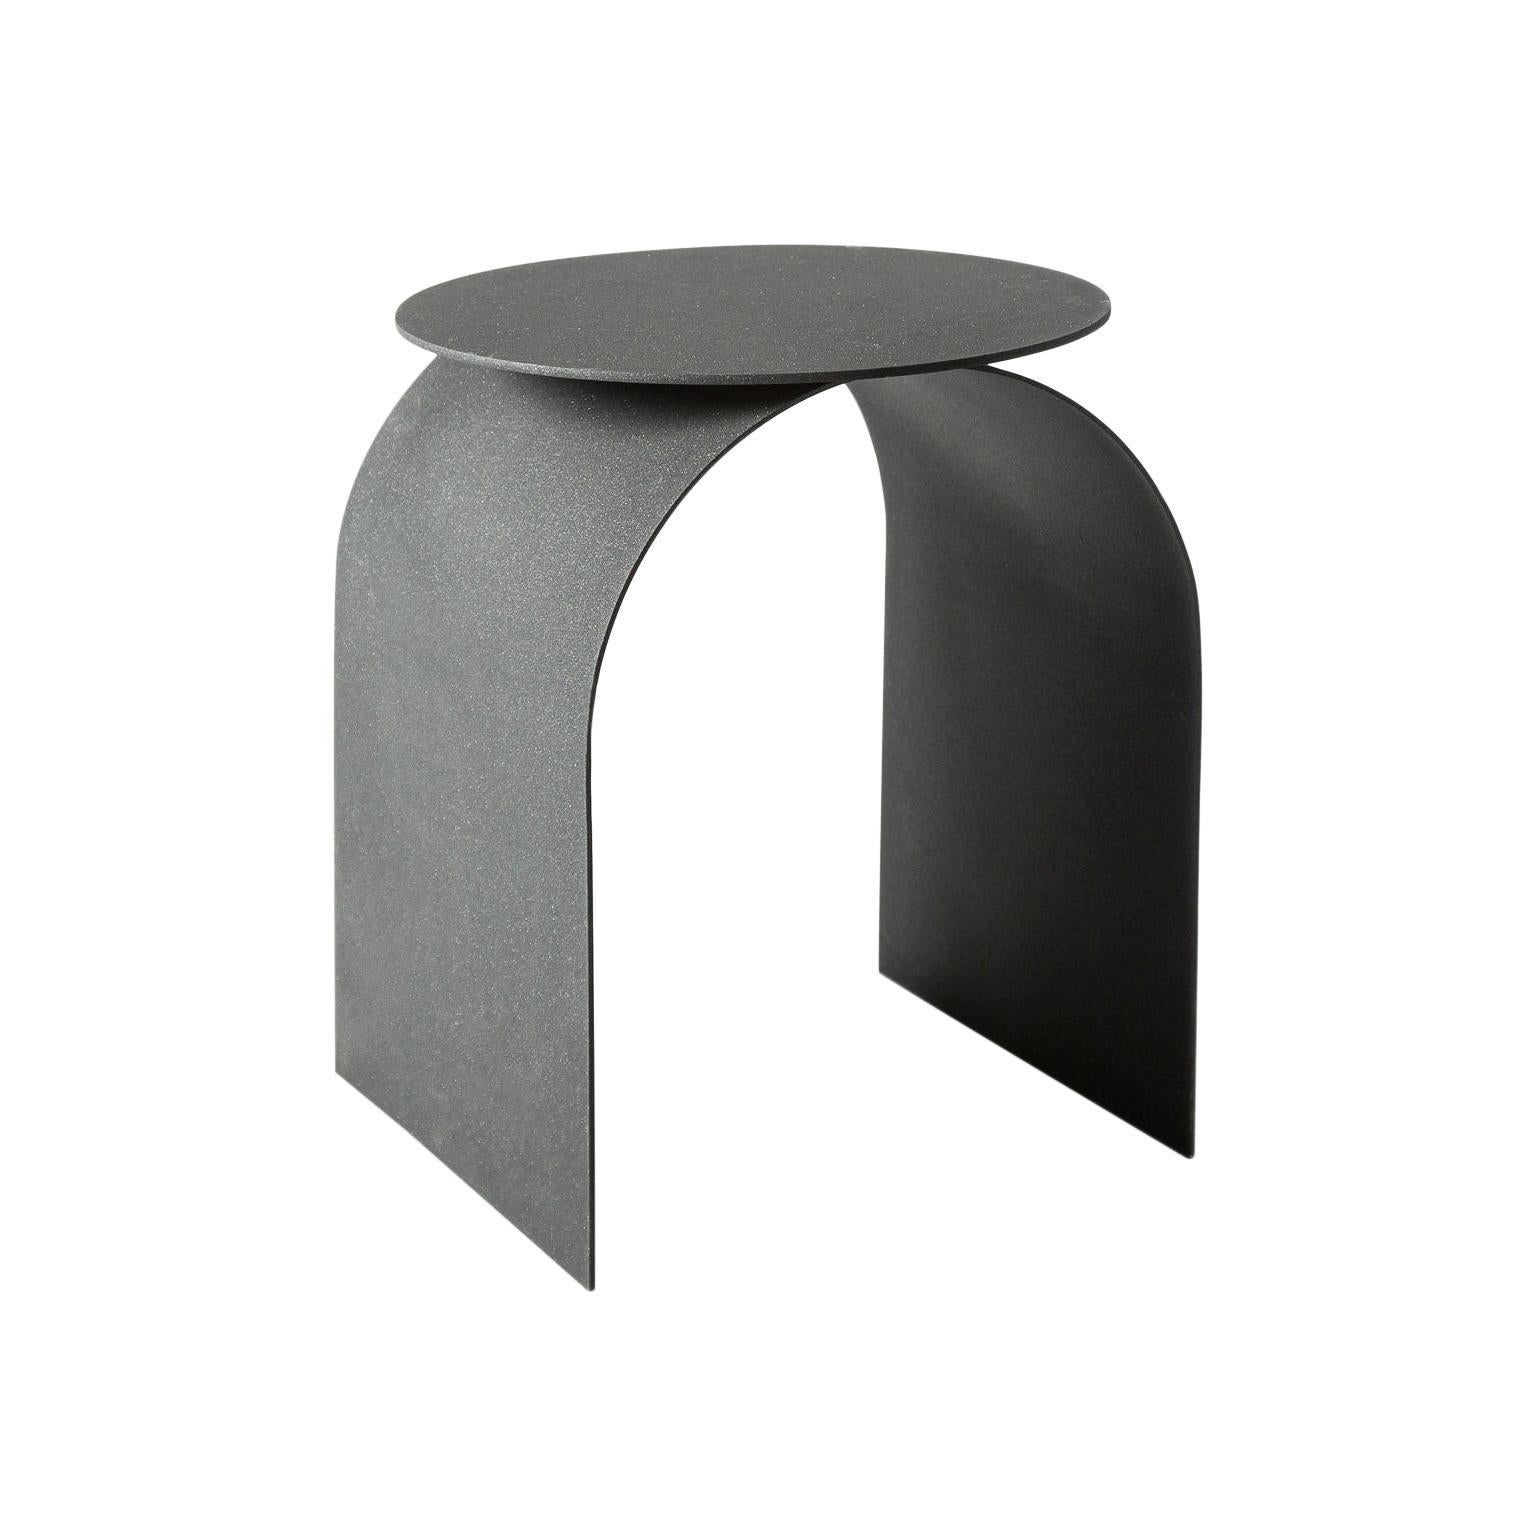 Spinzi Palladium Sculptural Side Table, Black Metal, Collectible Italian Design